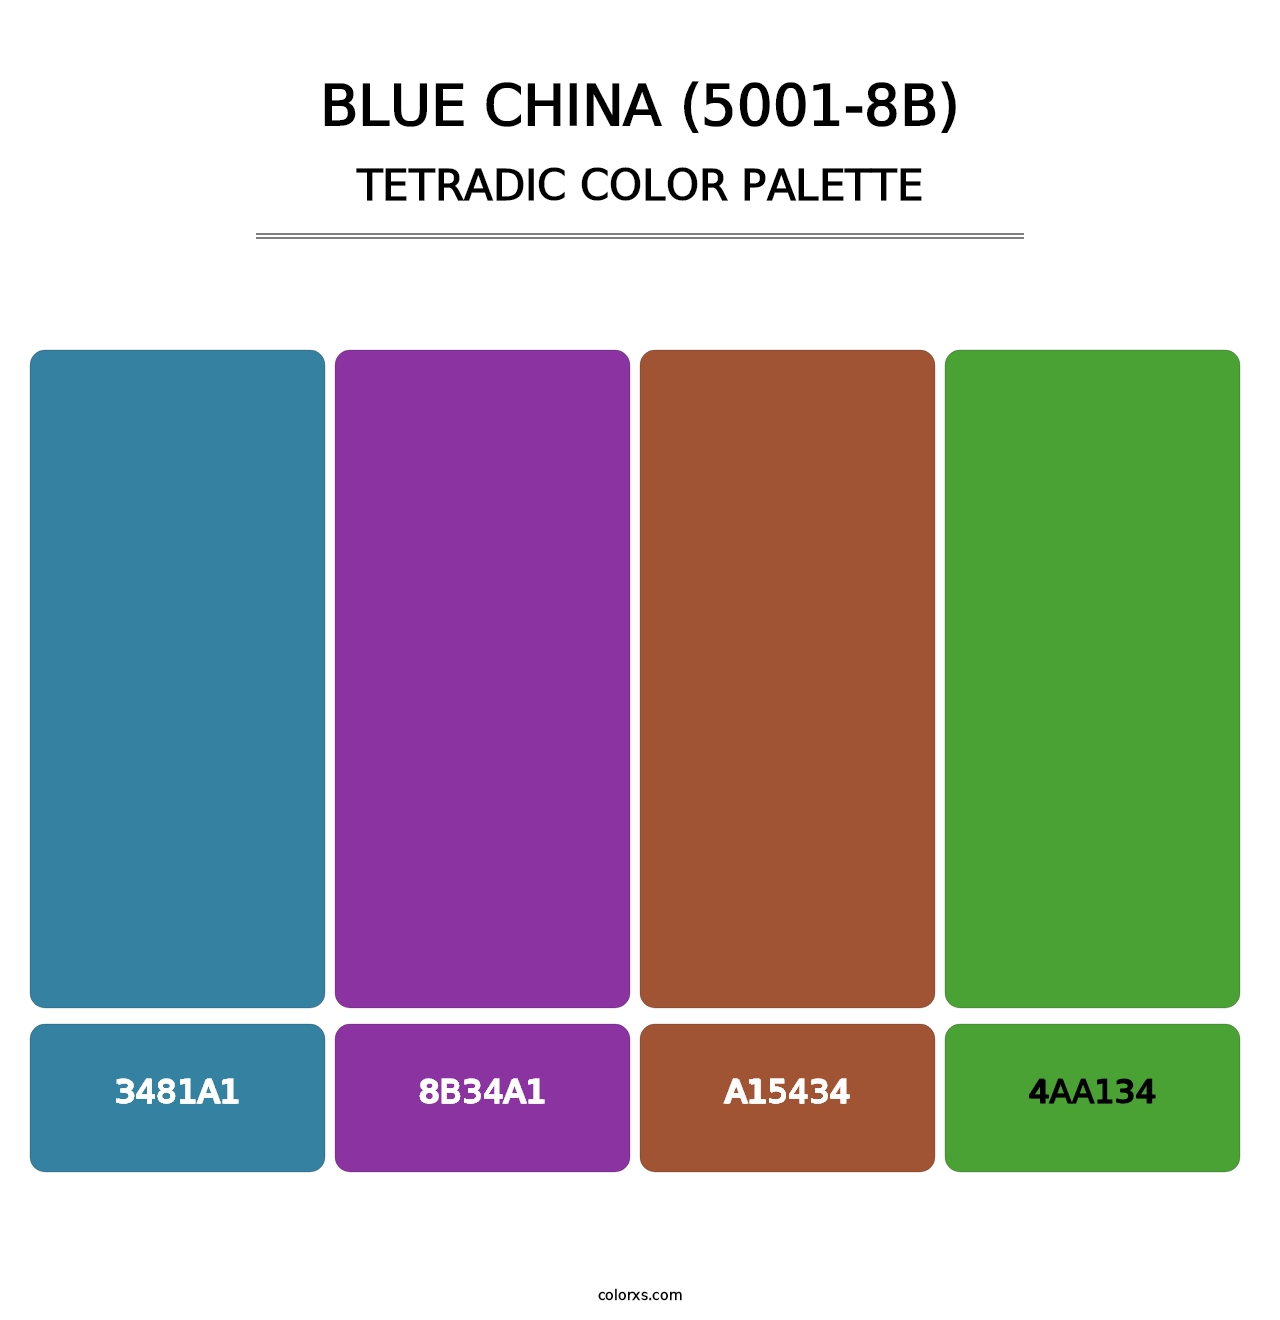 Blue China (5001-8B) - Tetradic Color Palette